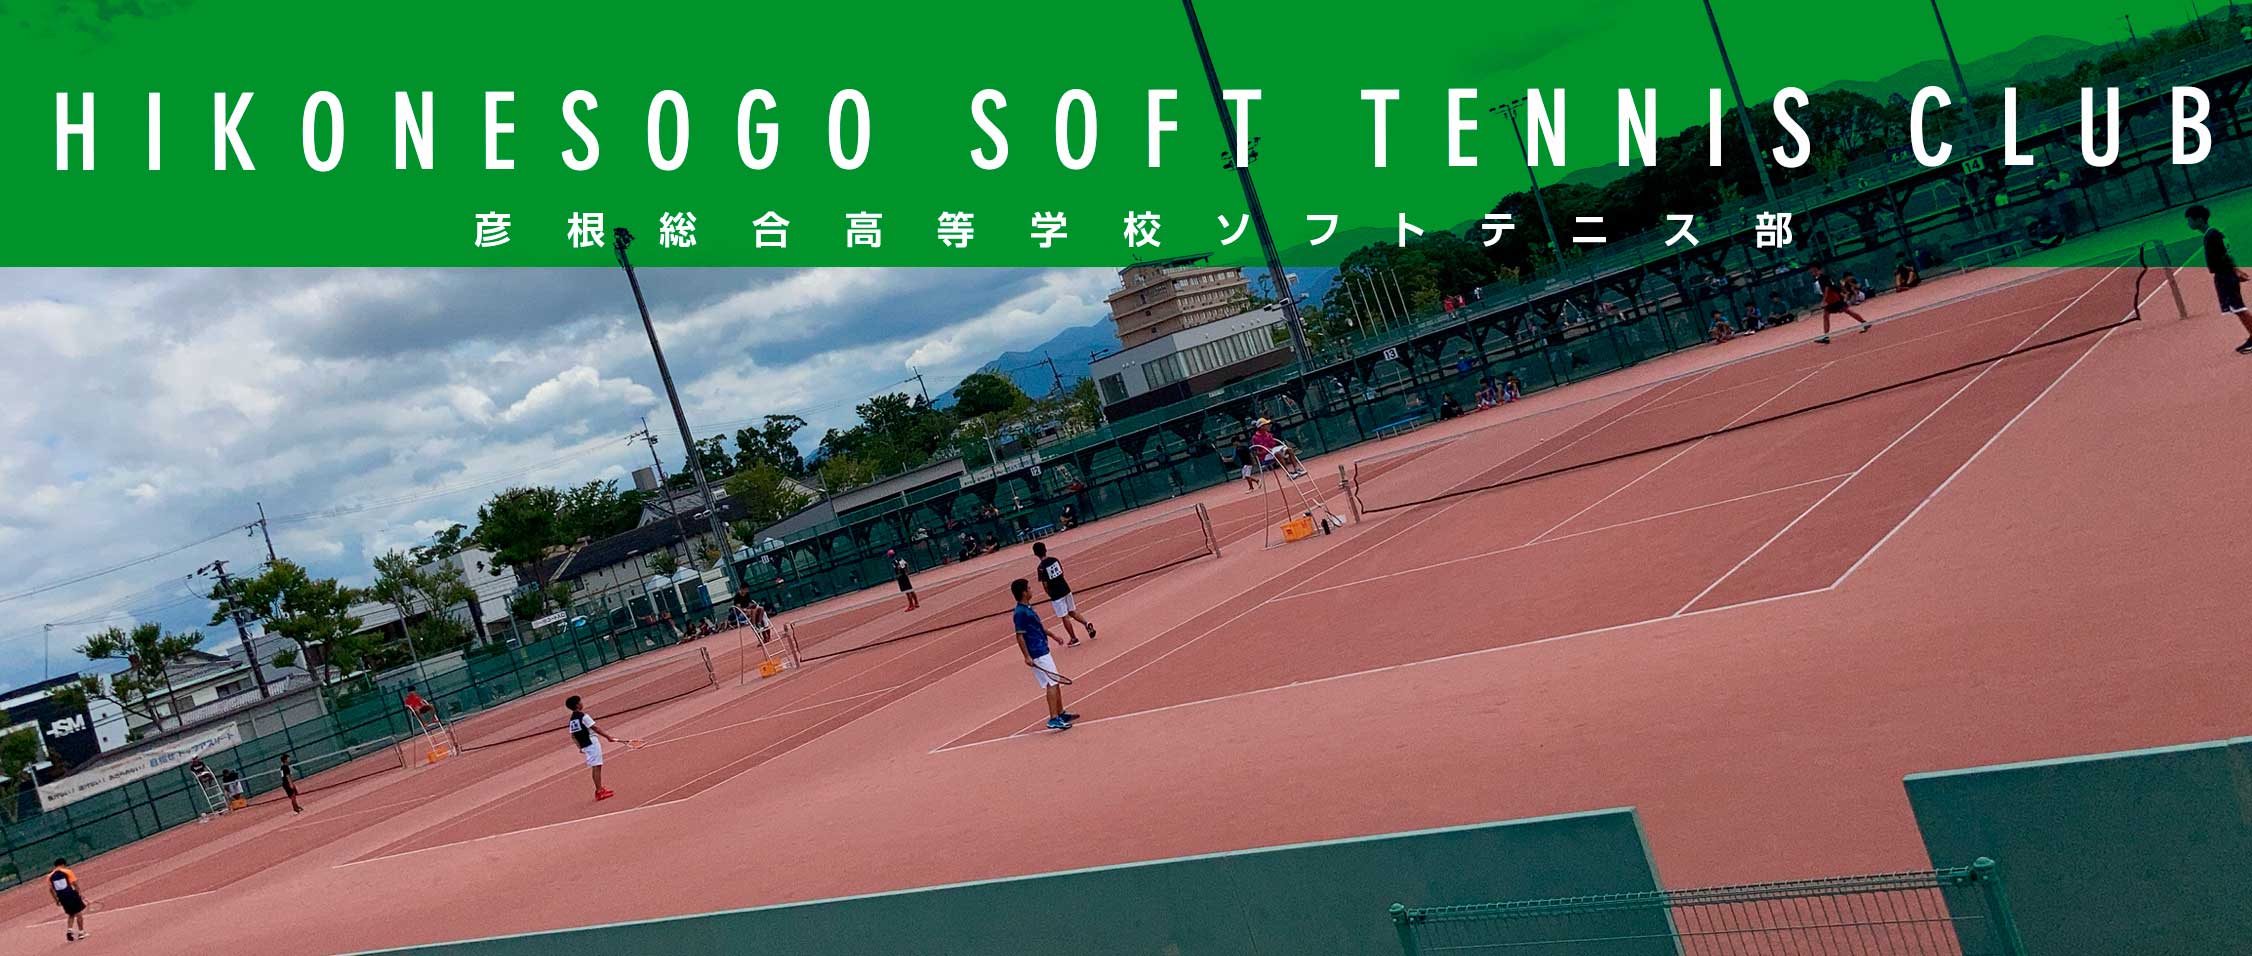 彦根総合高等学校ソフトテニス部